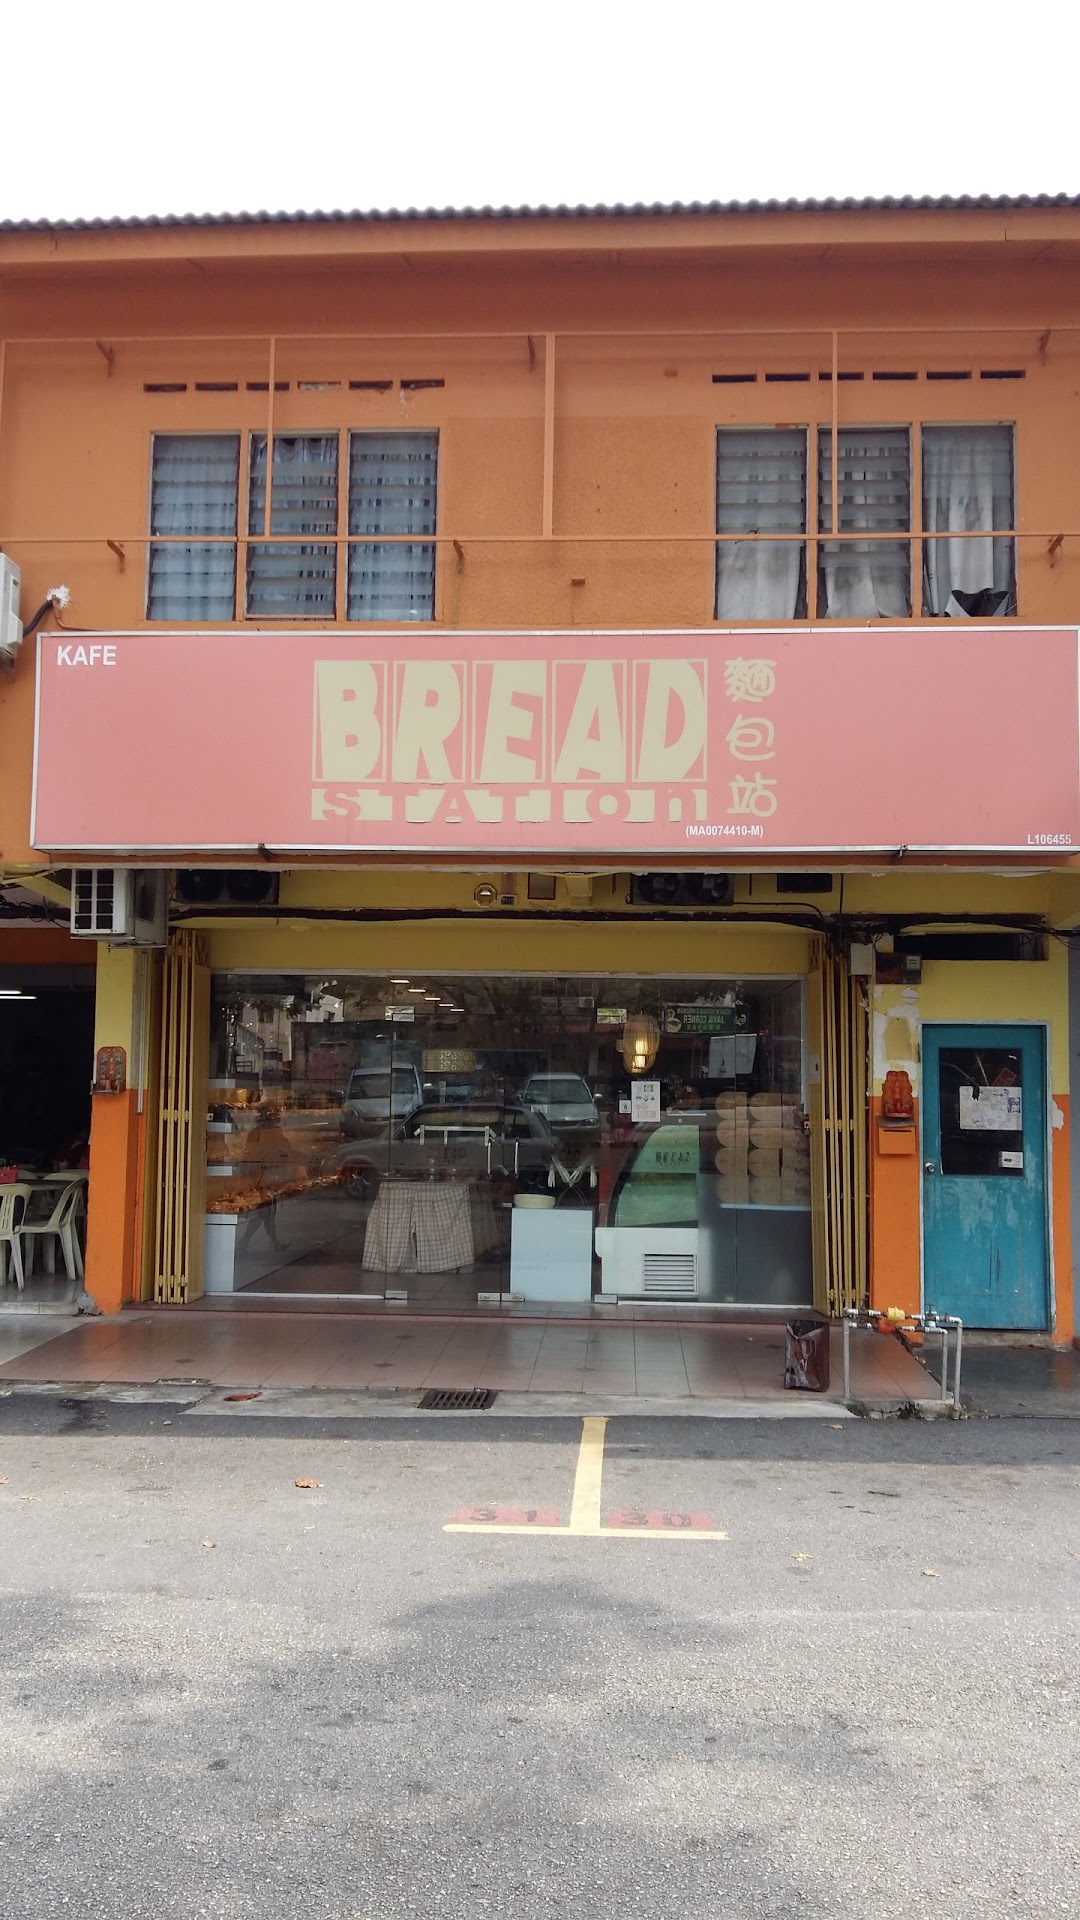 Bread Station